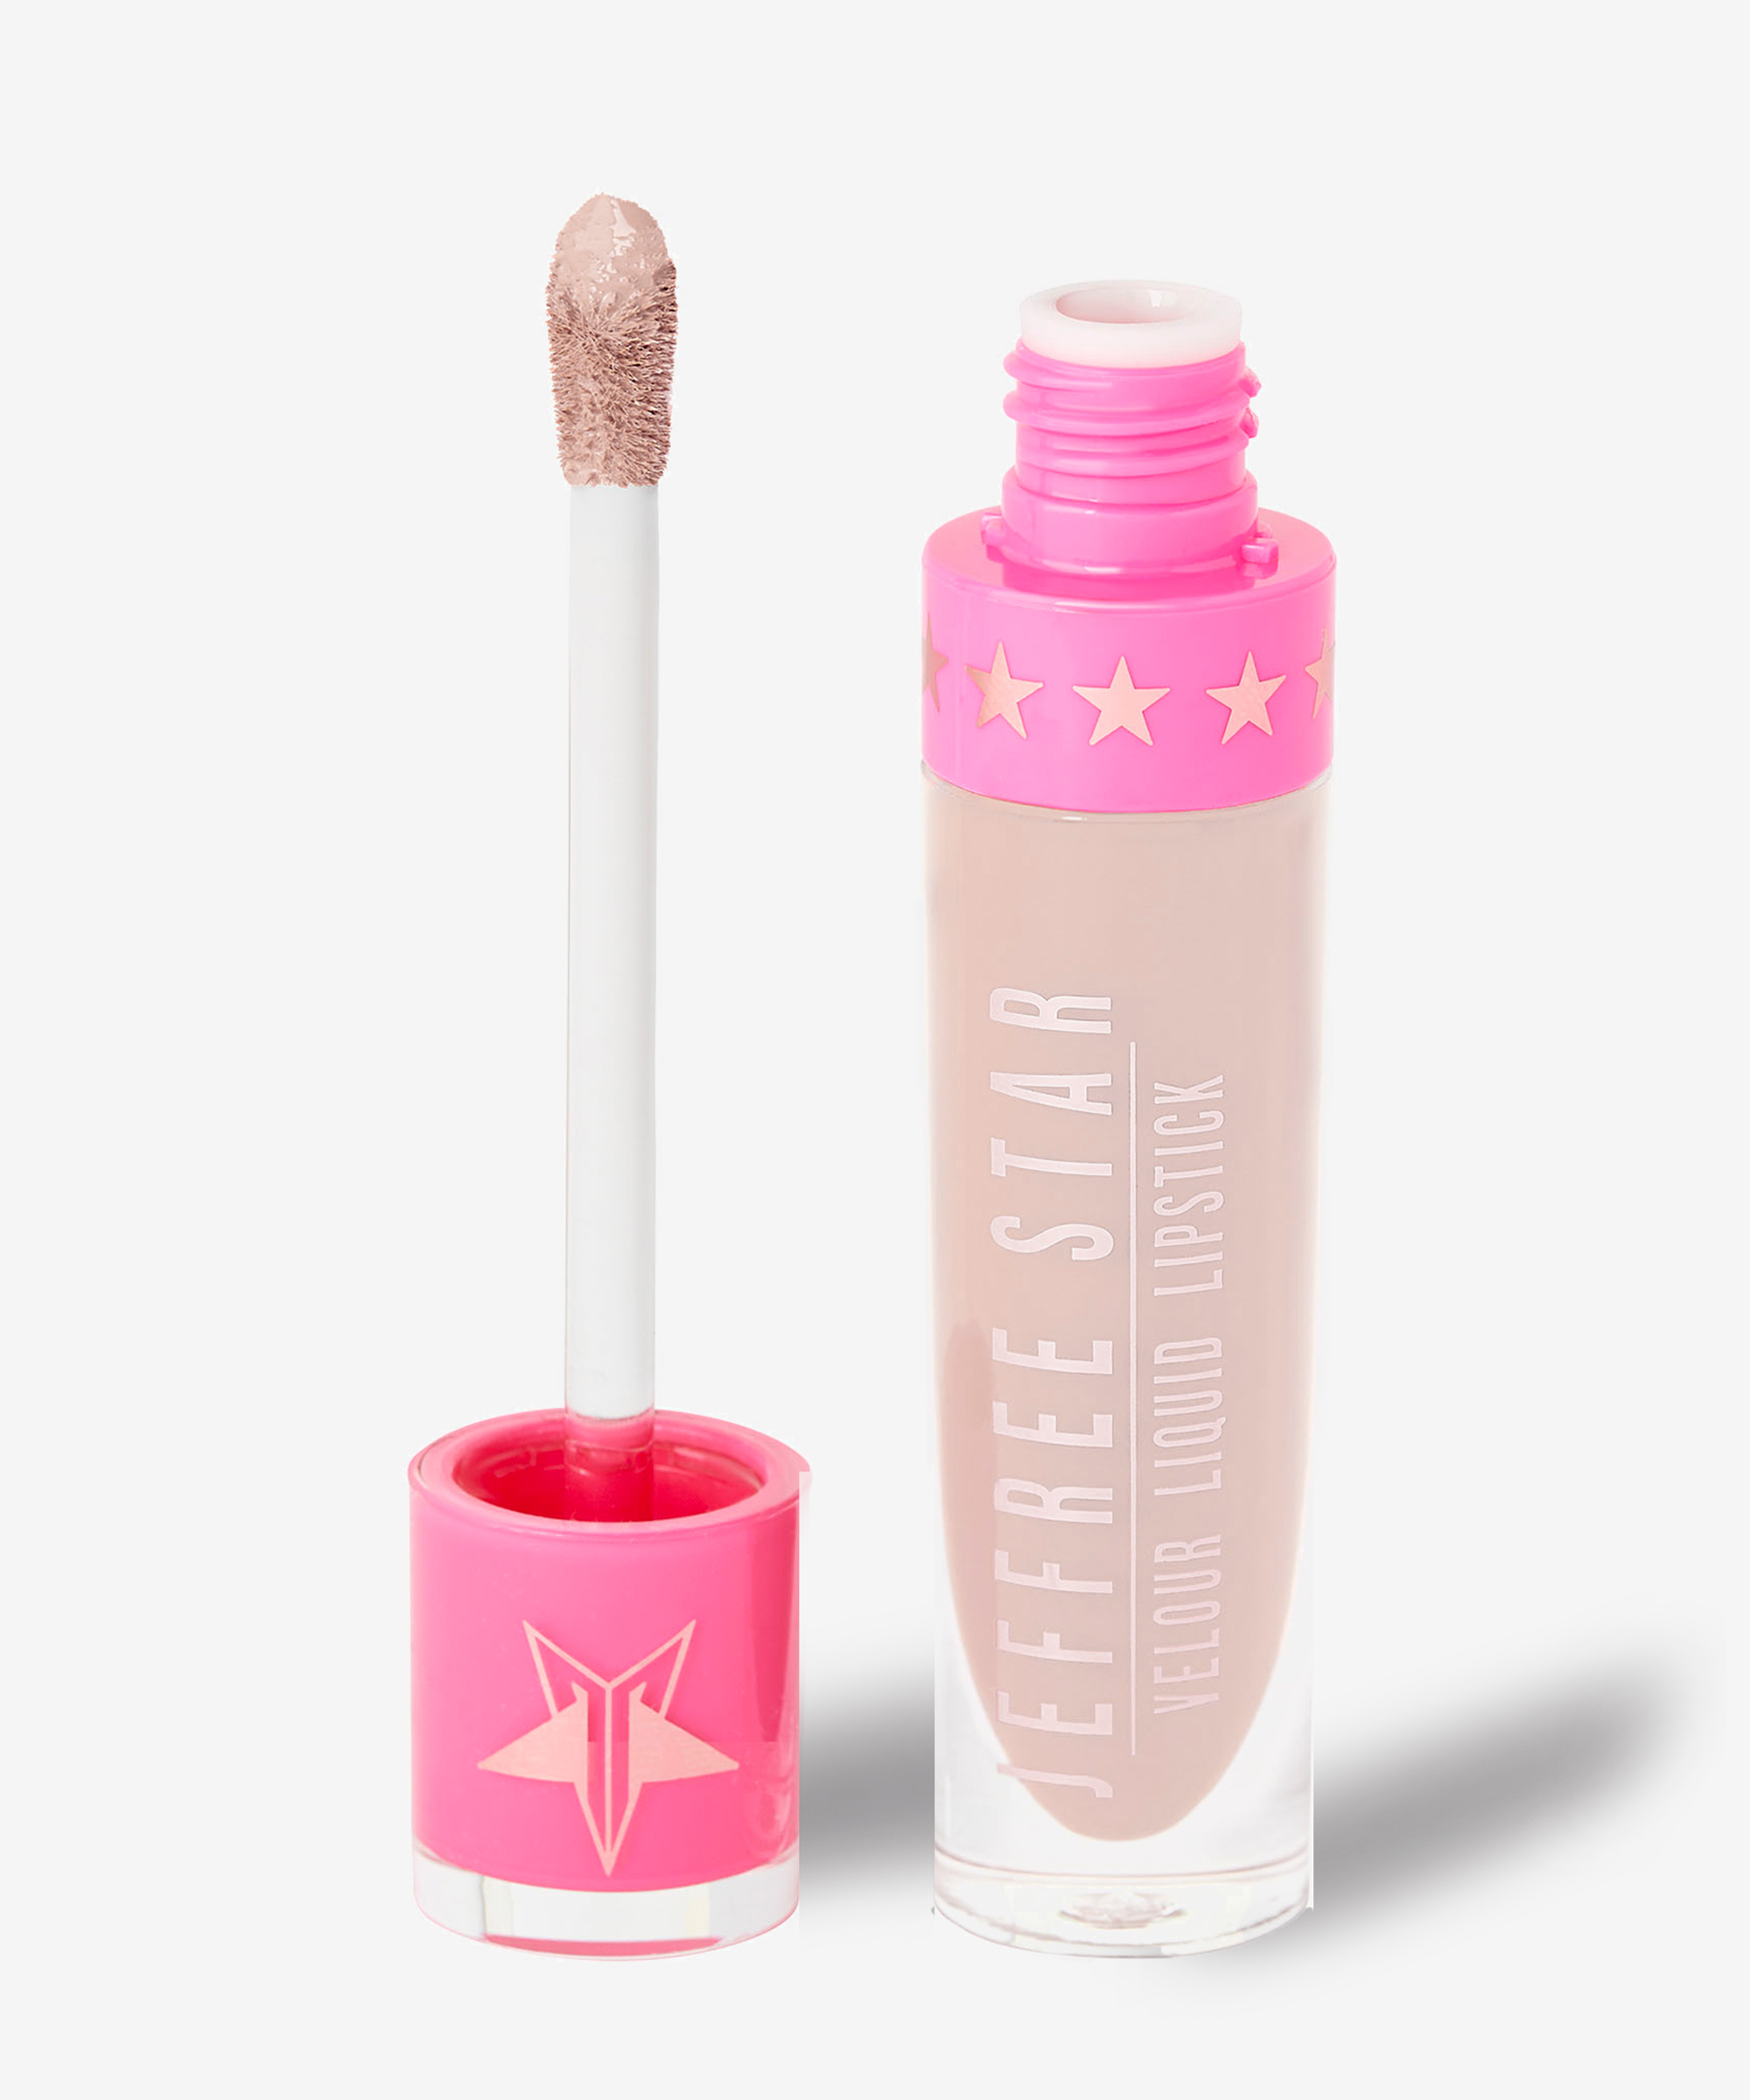 Distribuere dagbog scrapbog Jeffree Star Cosmetics Velour Liquid Lipstick at BEAUTY BAY